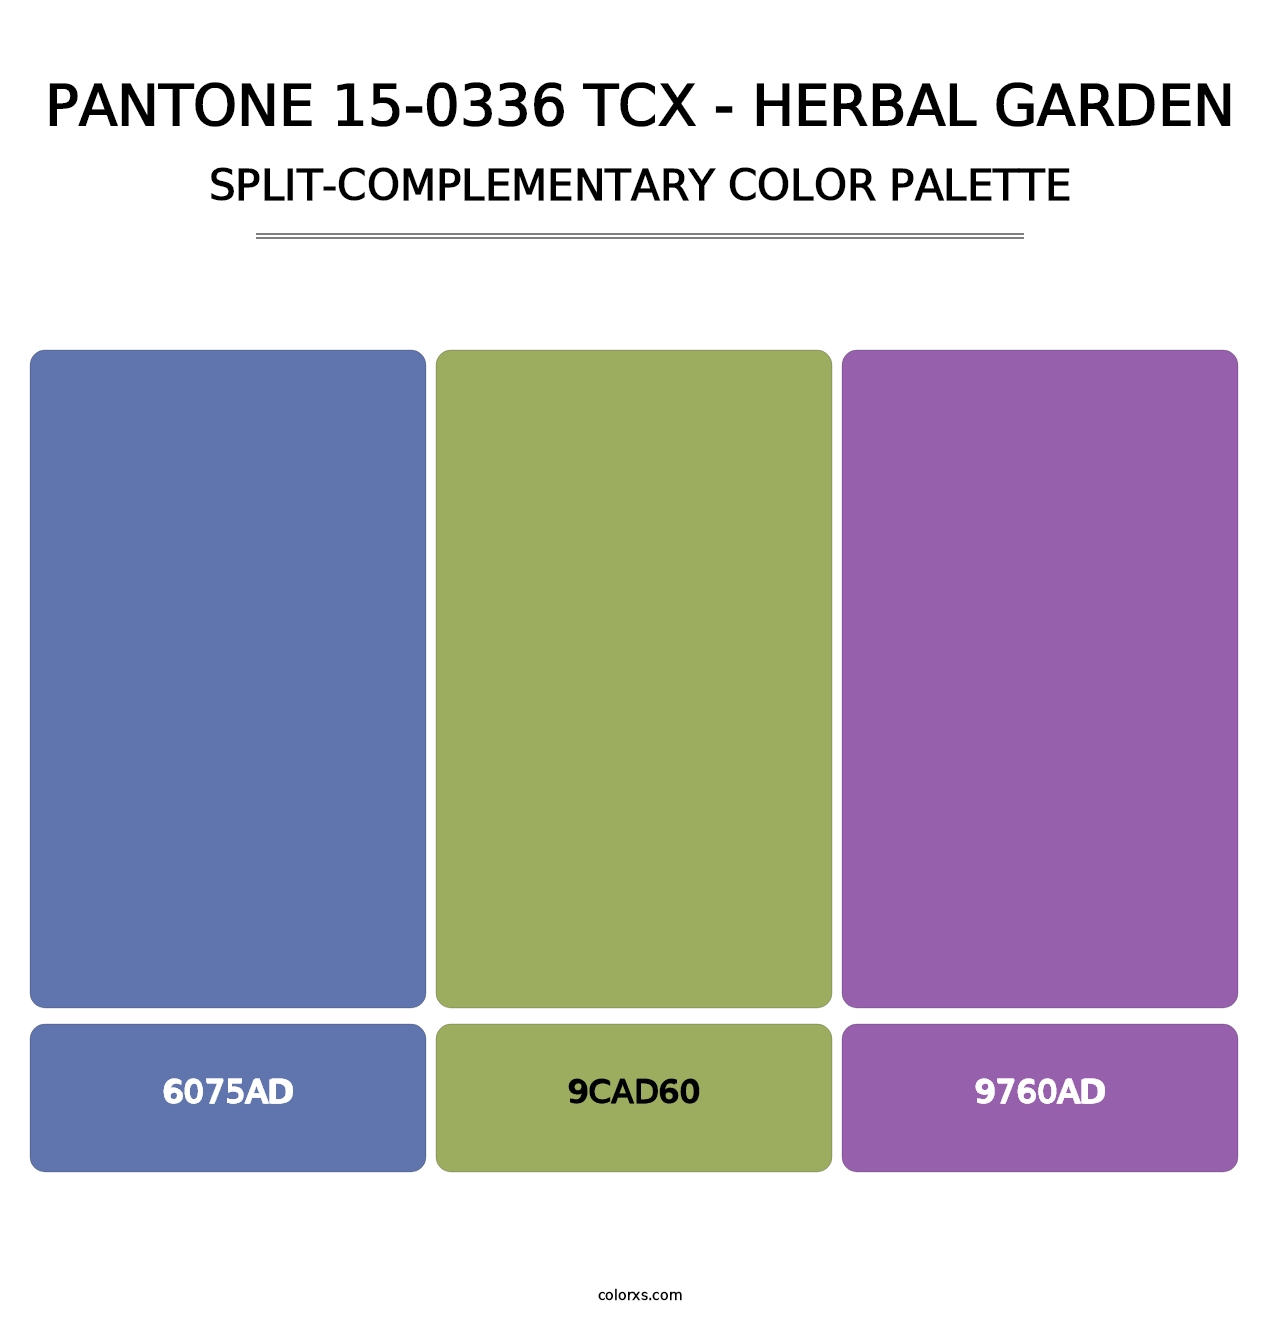 PANTONE 15-0336 TCX - Herbal Garden - Split-Complementary Color Palette